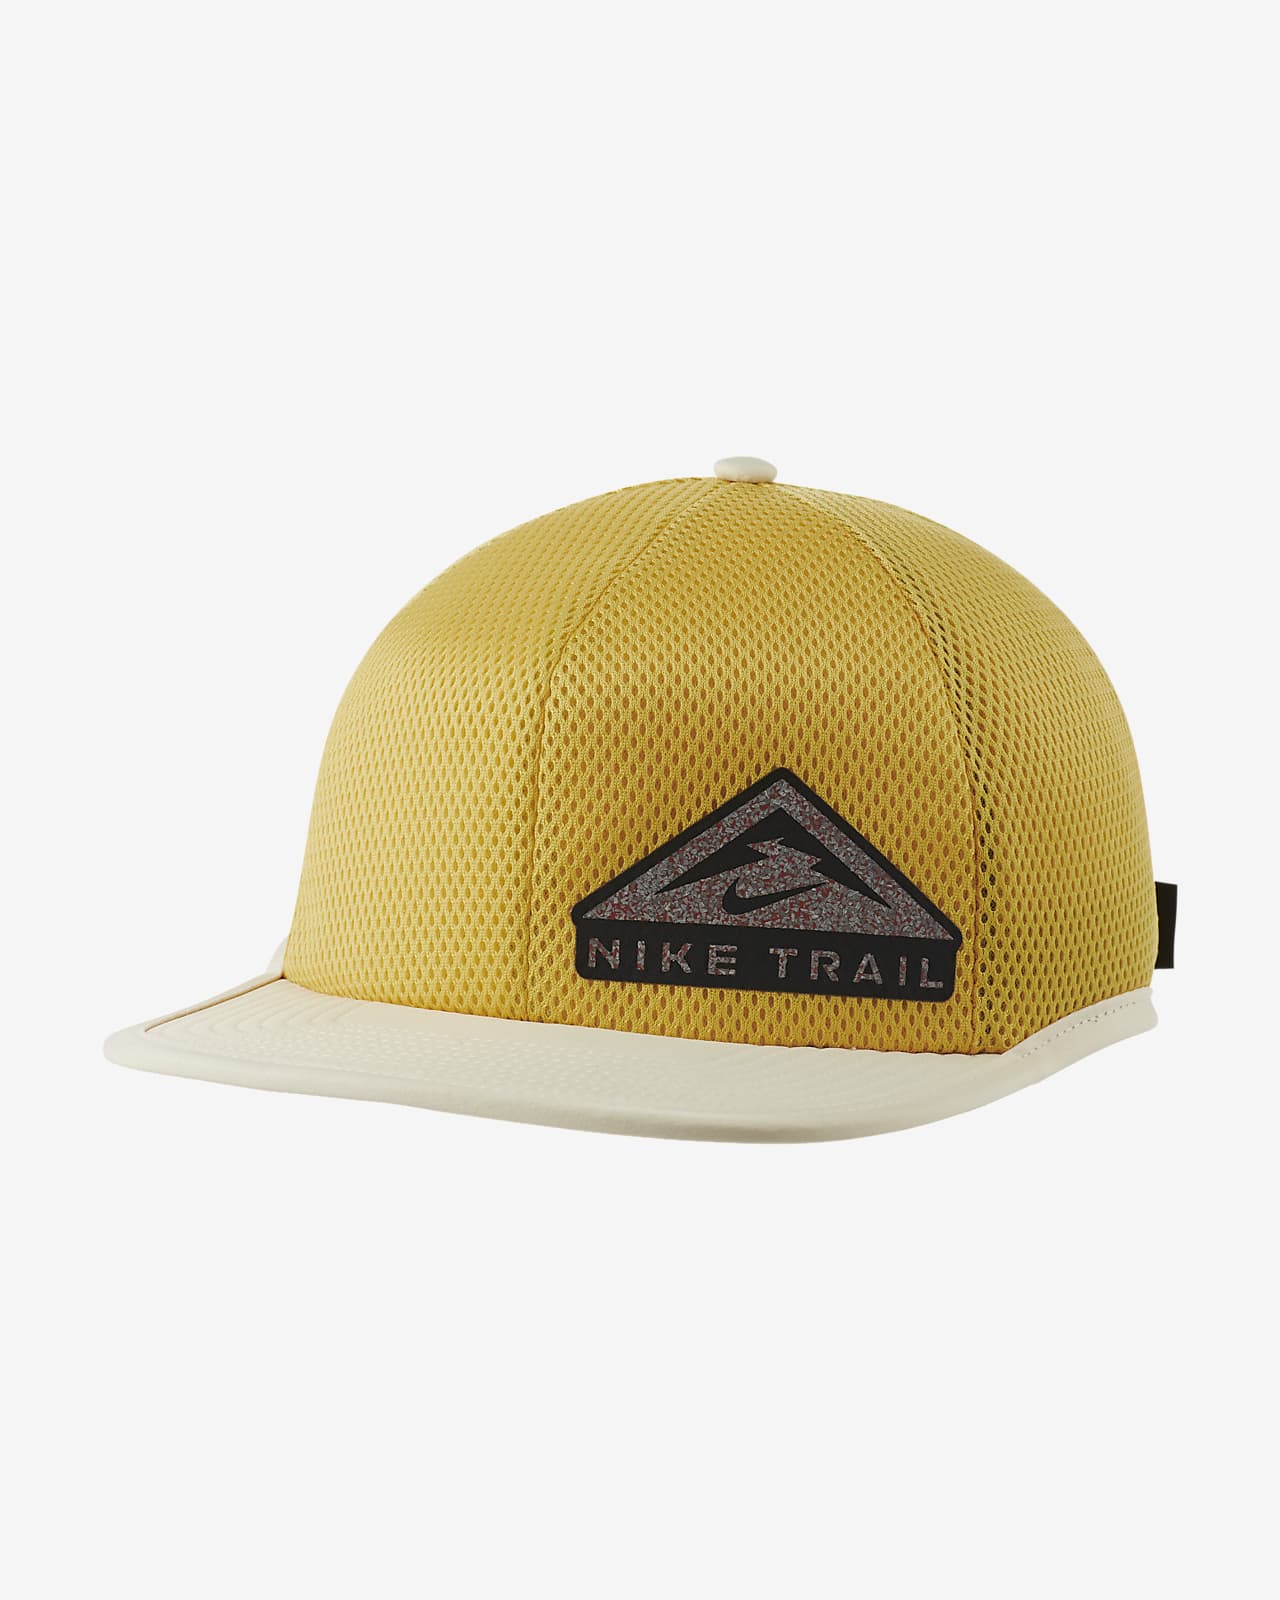 nike trail running hats